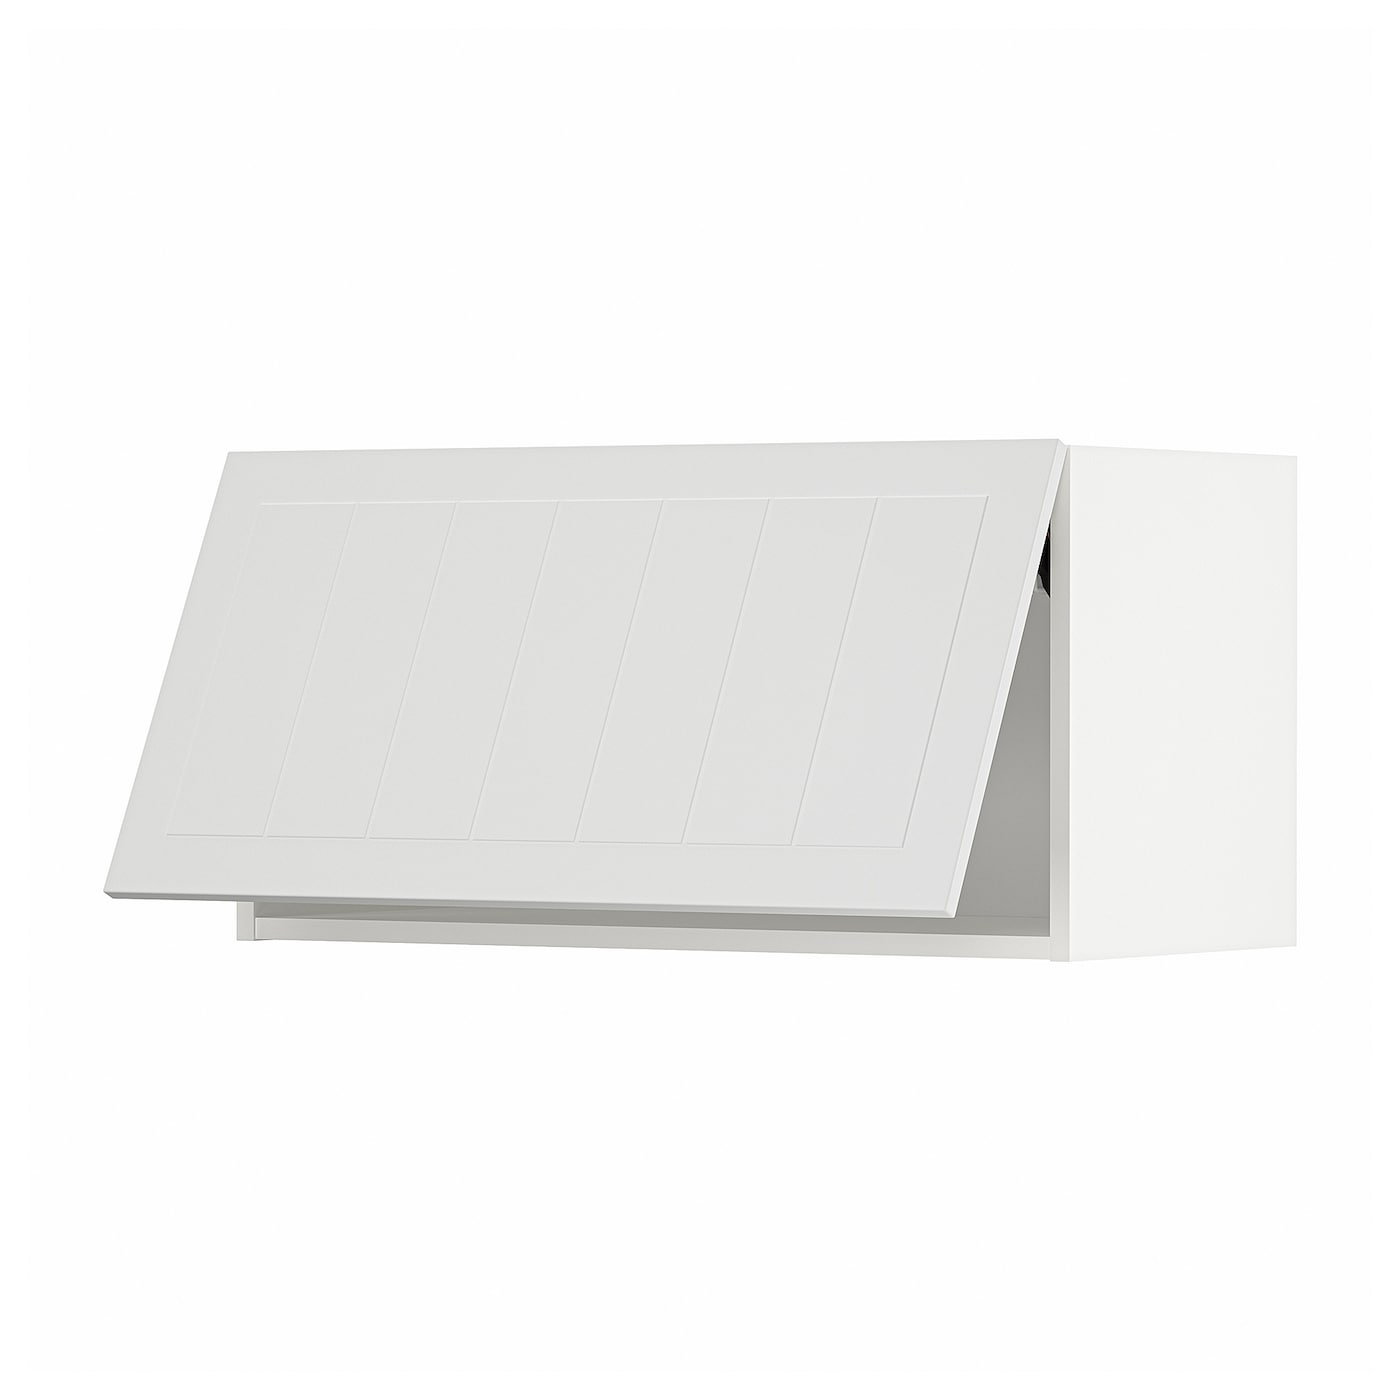 METOD Навесной шкаф - METOD IKEA/ МЕТОД ИКЕА, 40х80 см, белый